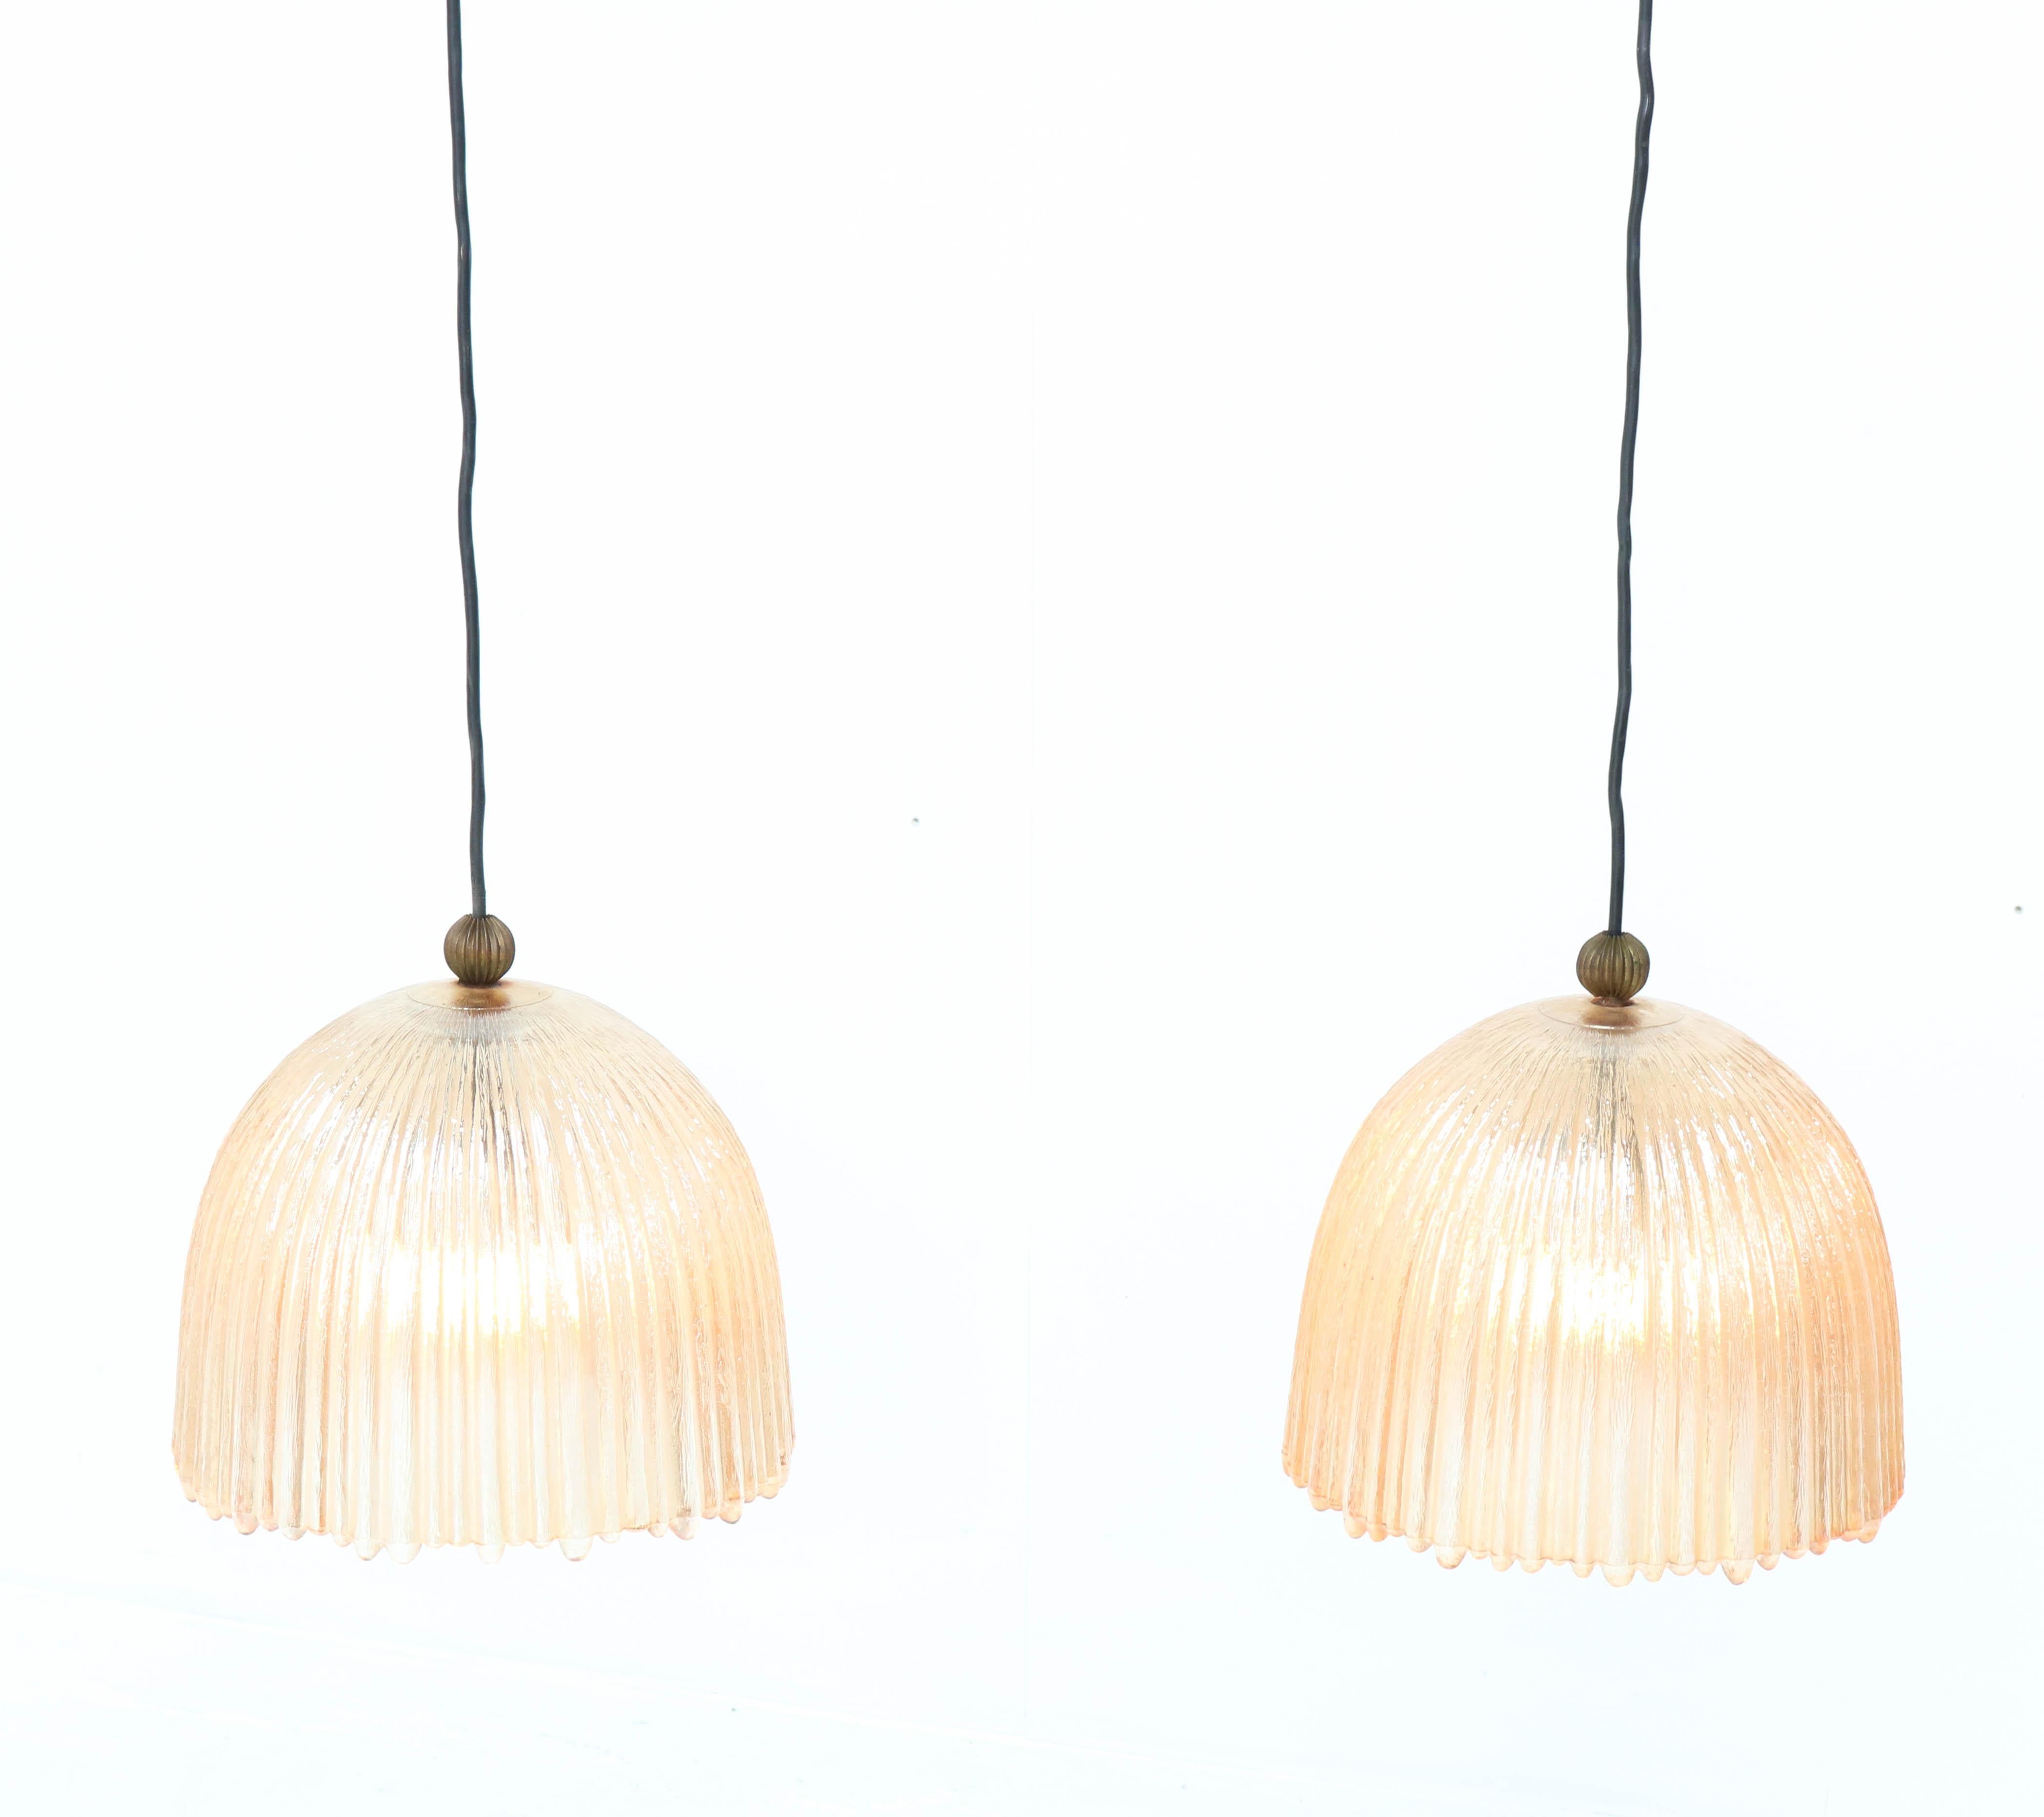 Italian Pair of Mid-Century Modern Murano Pendant Lights, 1960s